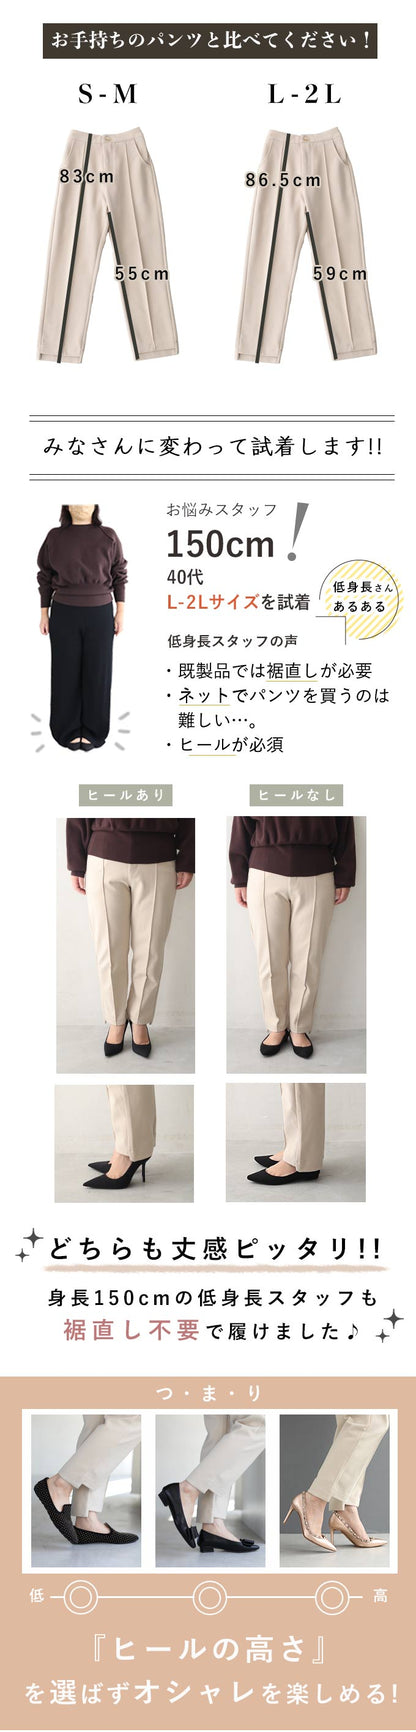 【wc-w54010】（S~M/L~2L対応）低身長さん用 裾直し不要美脚パンツ